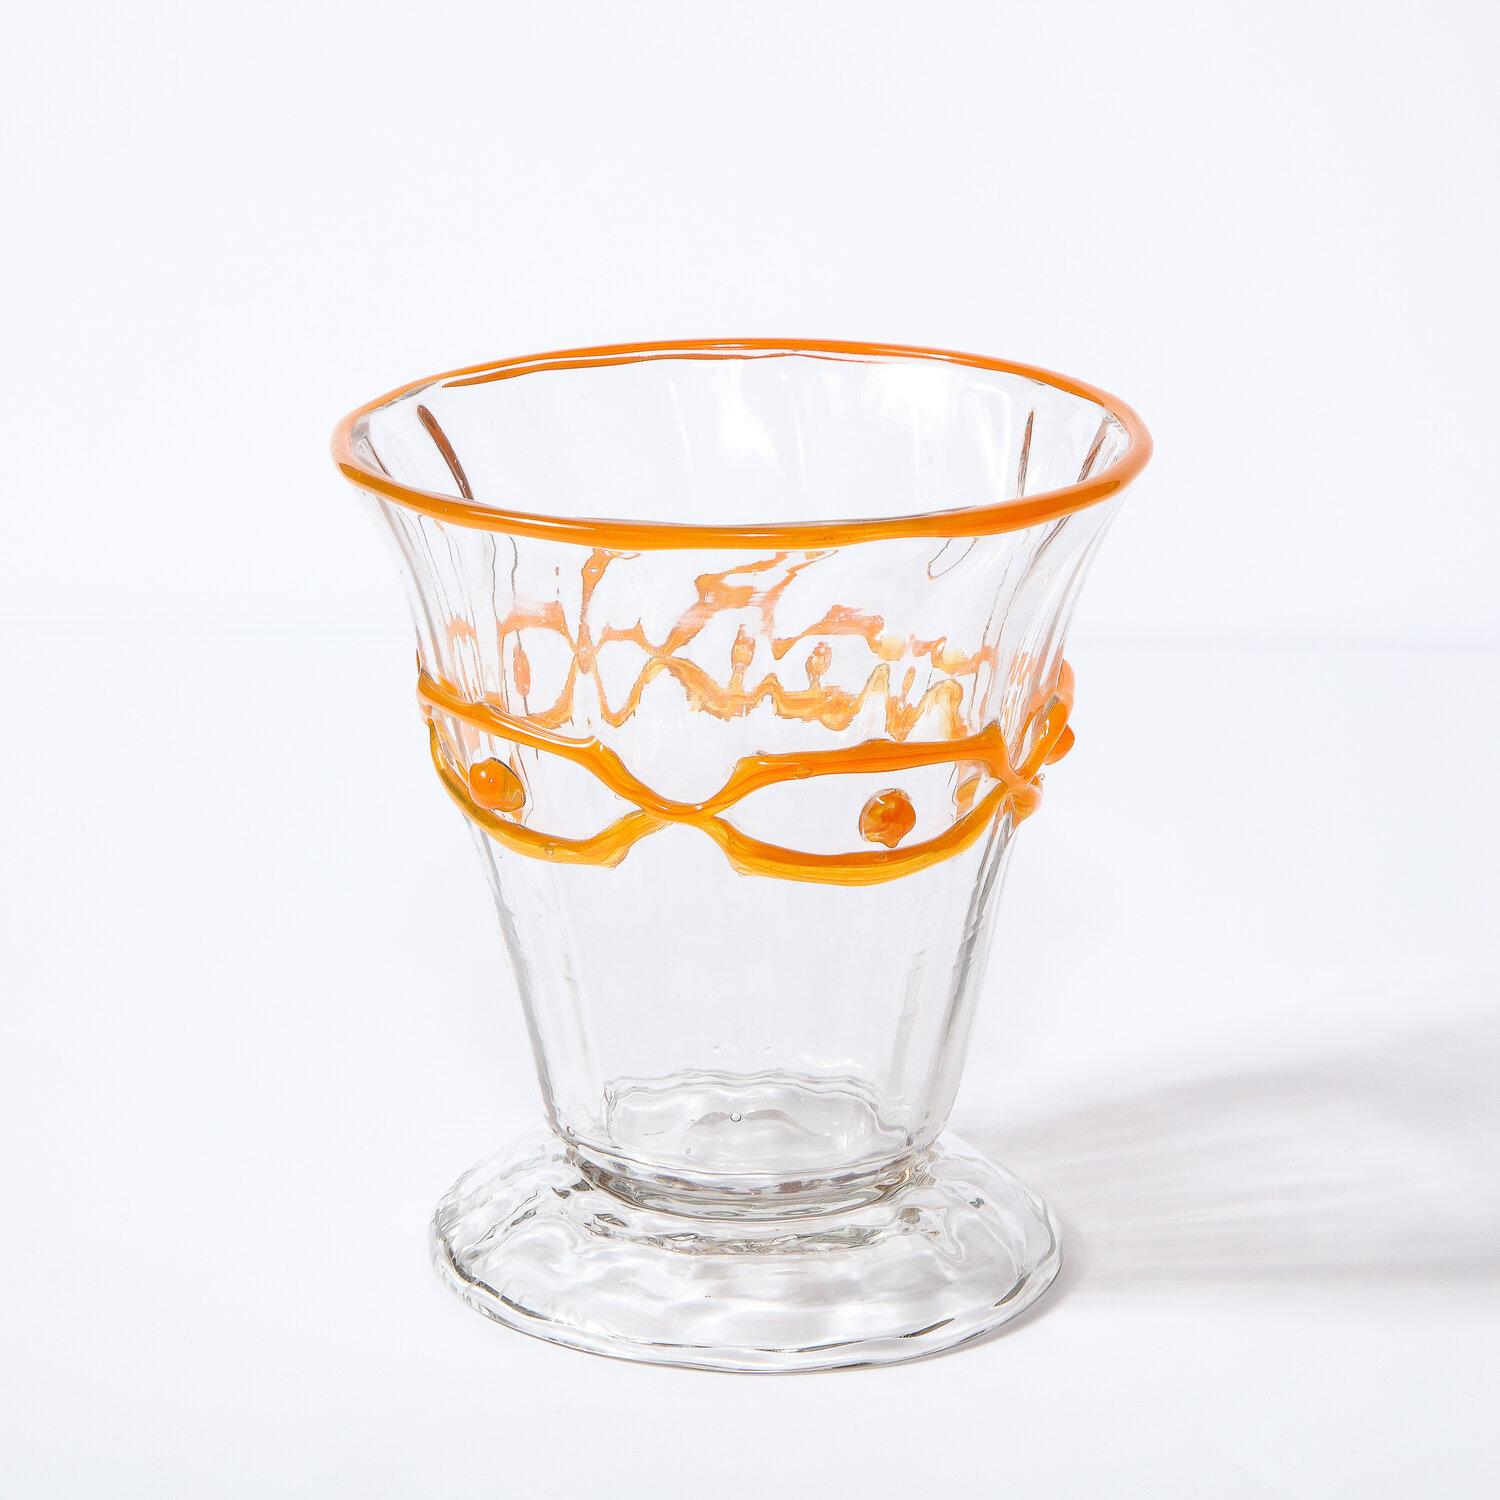 Art Glass Art Deco Translucent Glass Vase w/ Tangerine Accents in Relief Signed Daum Nancy